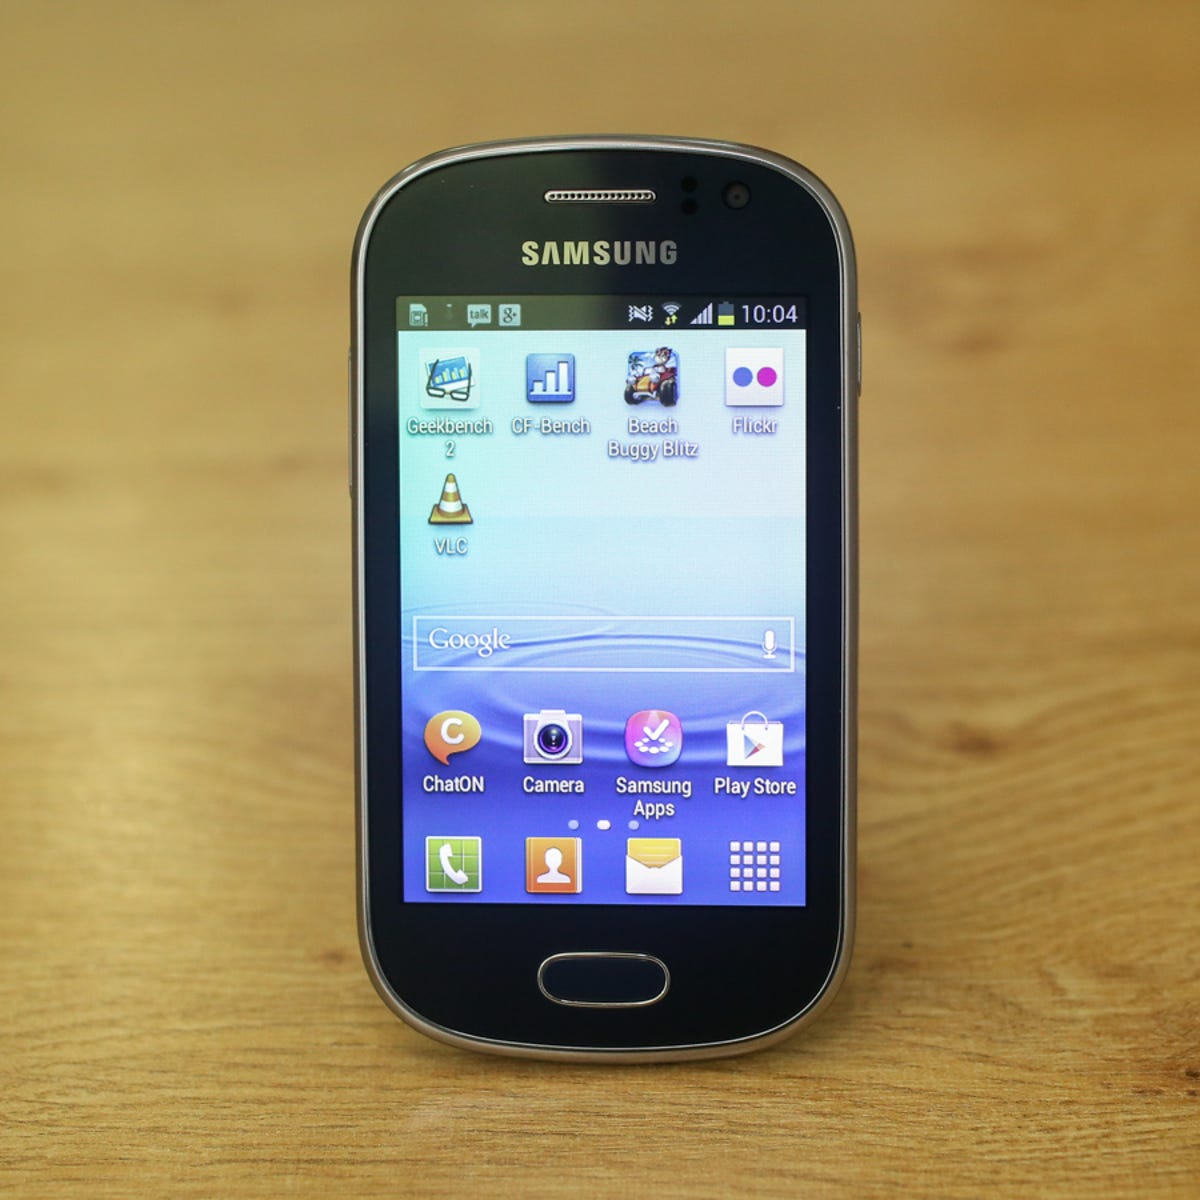 Samsung Galaxy Fame s6810. Смартфон Samsung Galaxy Fame gt-s6810. Samsung Galaxy Fame gt-s6810 s4 Mini. Самсунг галакси Фейм Лайт. Самсунг плей что это